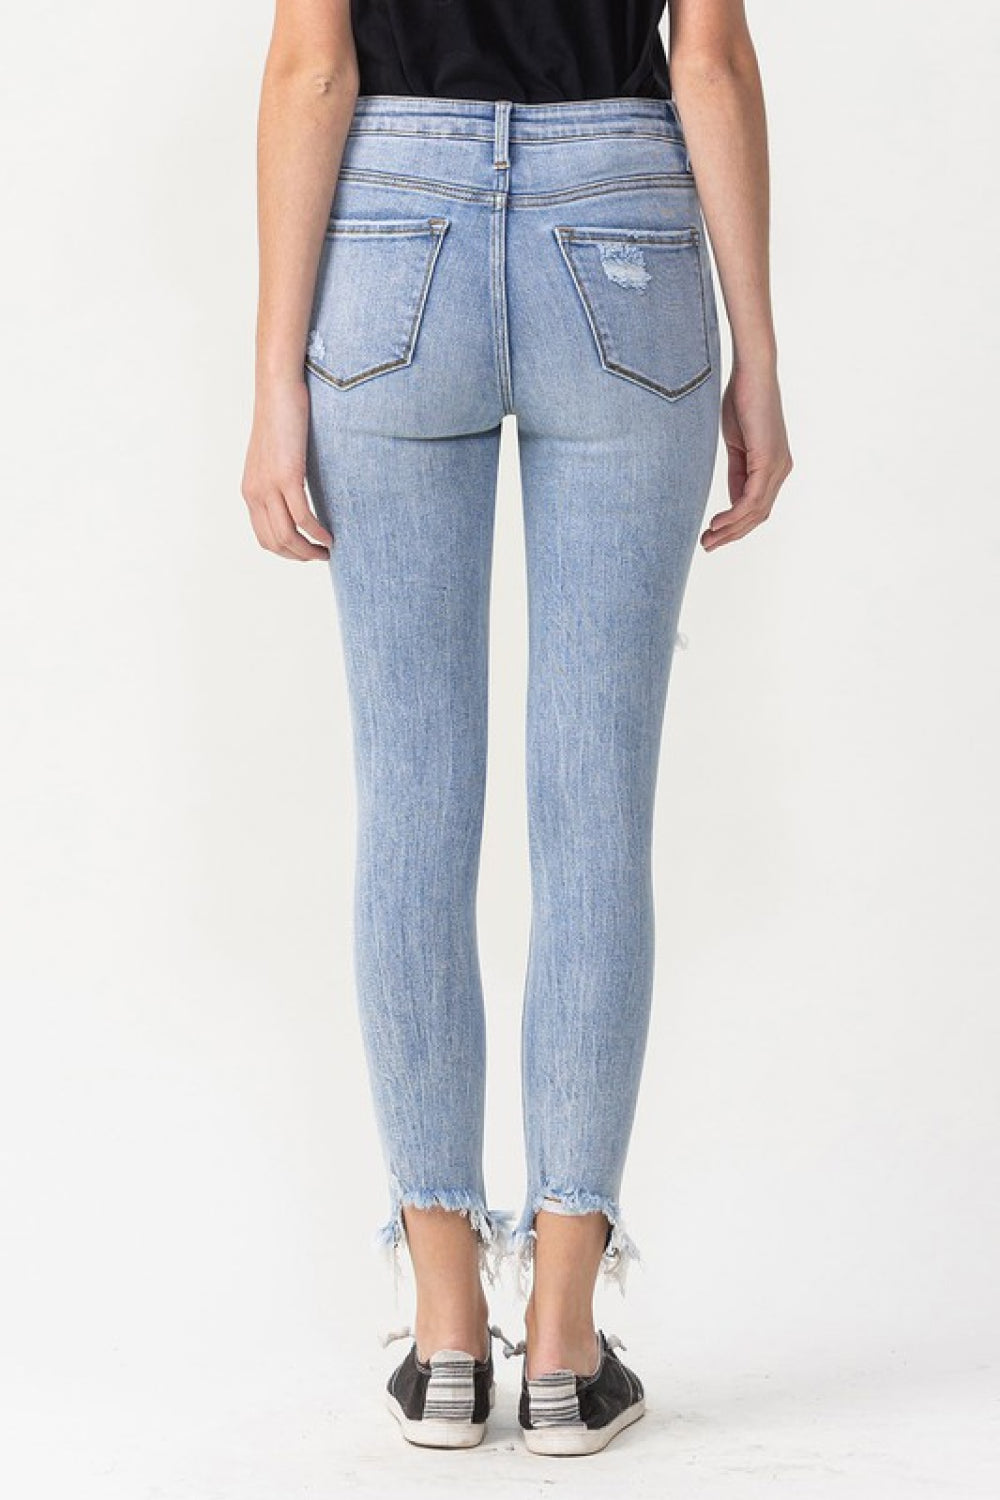 Lovervet Full Size Lauren Distressed High Rise Skinny Jeans - Make'm Blush Boutique 